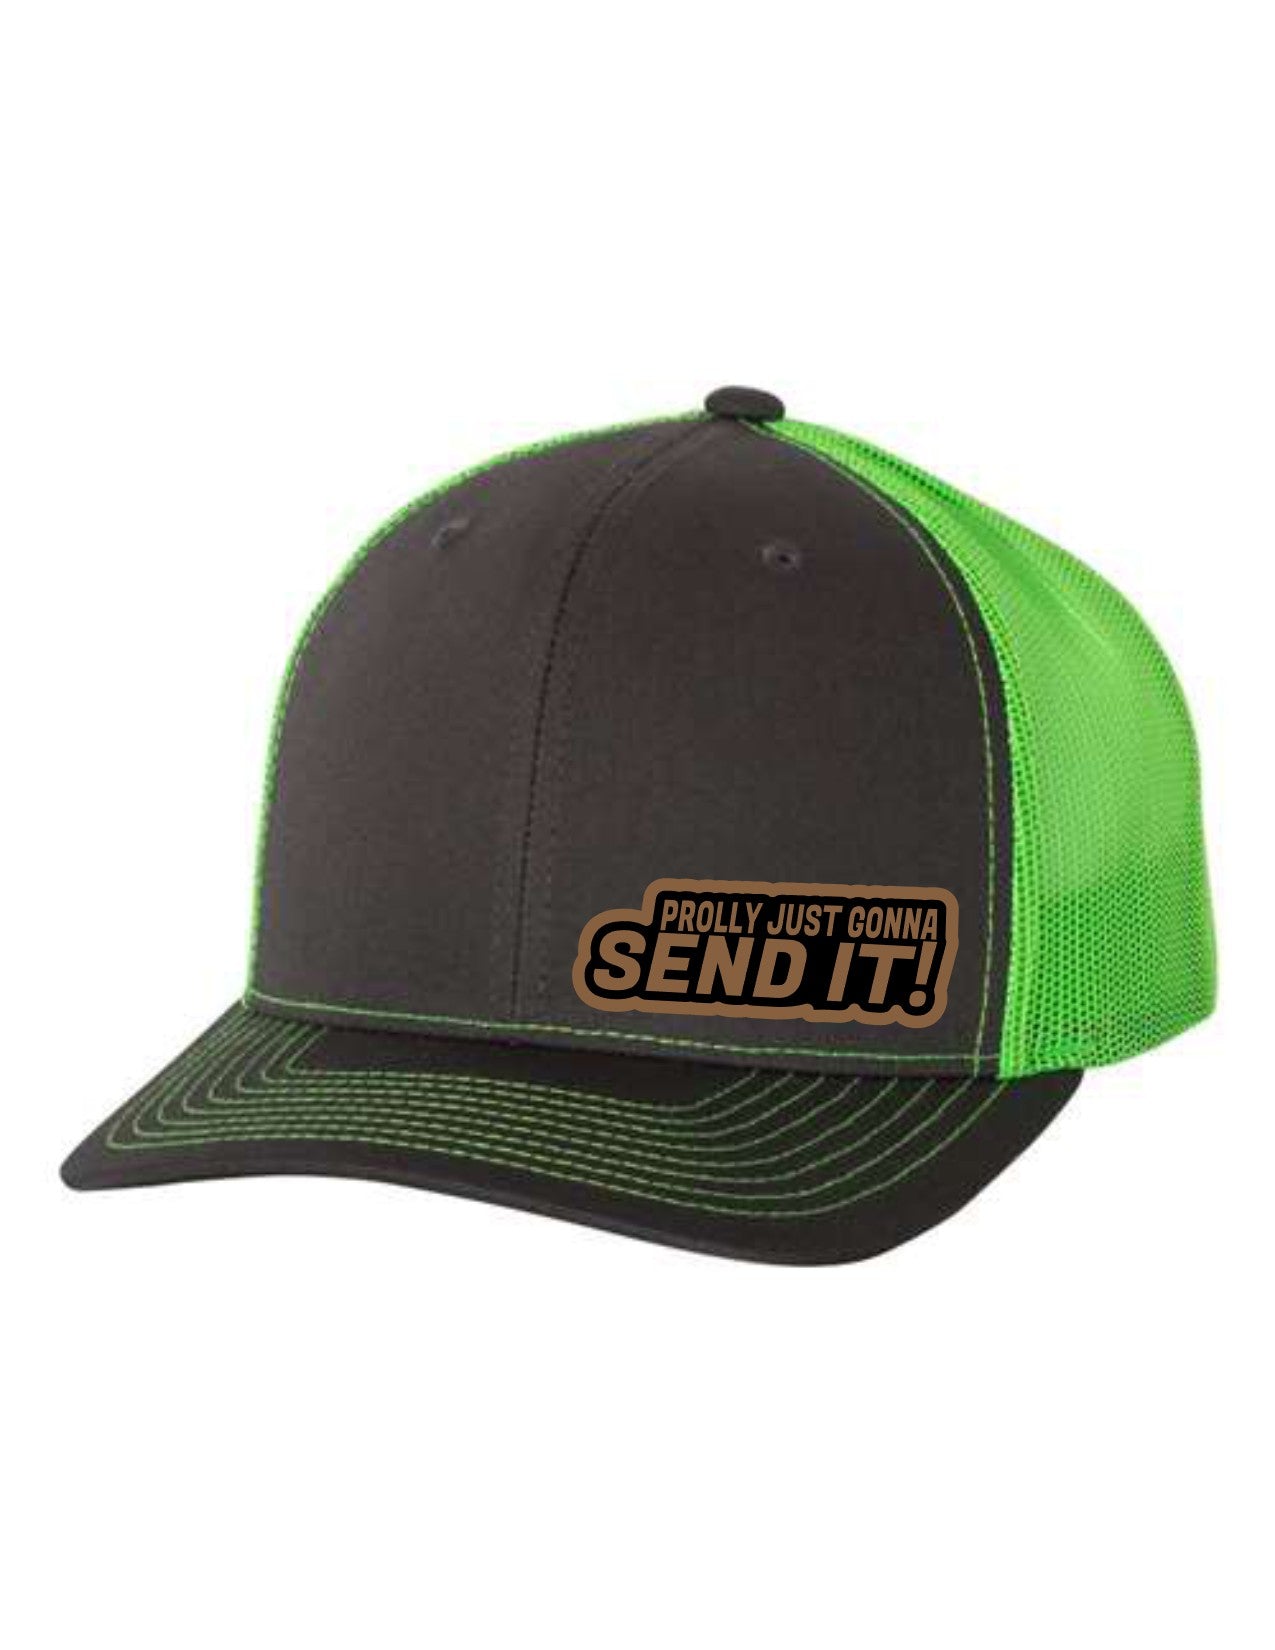 Send It Leather Patch Richardson 112 Trucker Hat